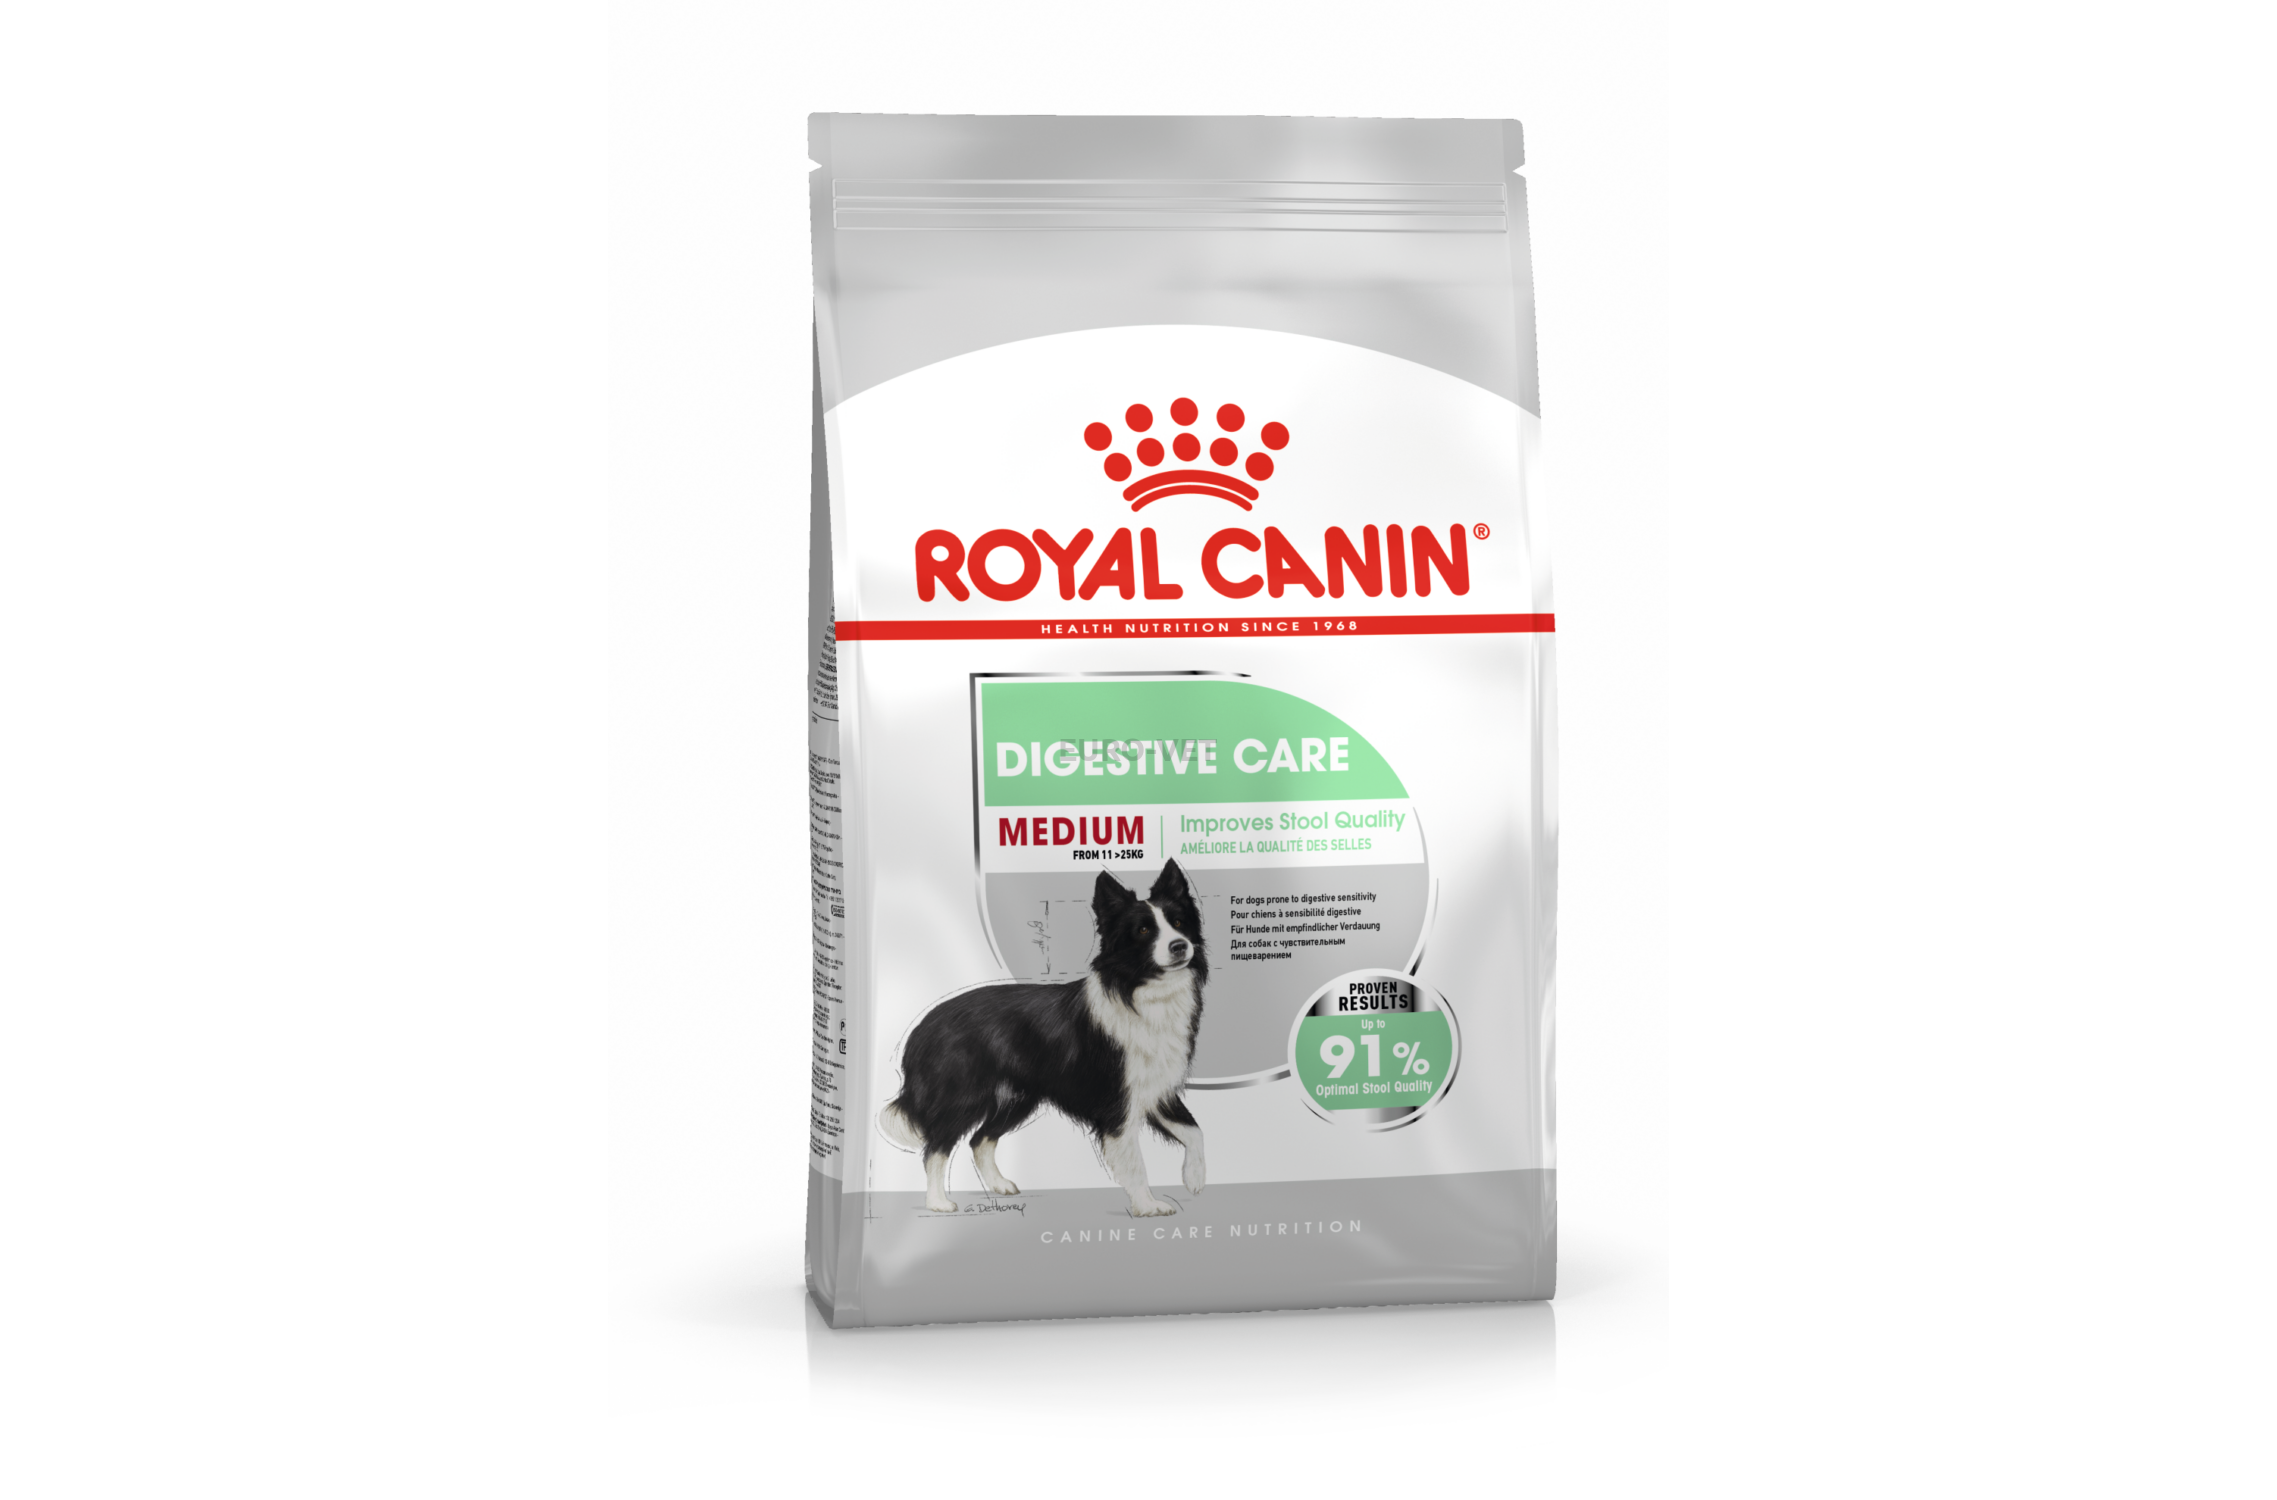 Royal Canin Sensitive Digestion Cat Wet